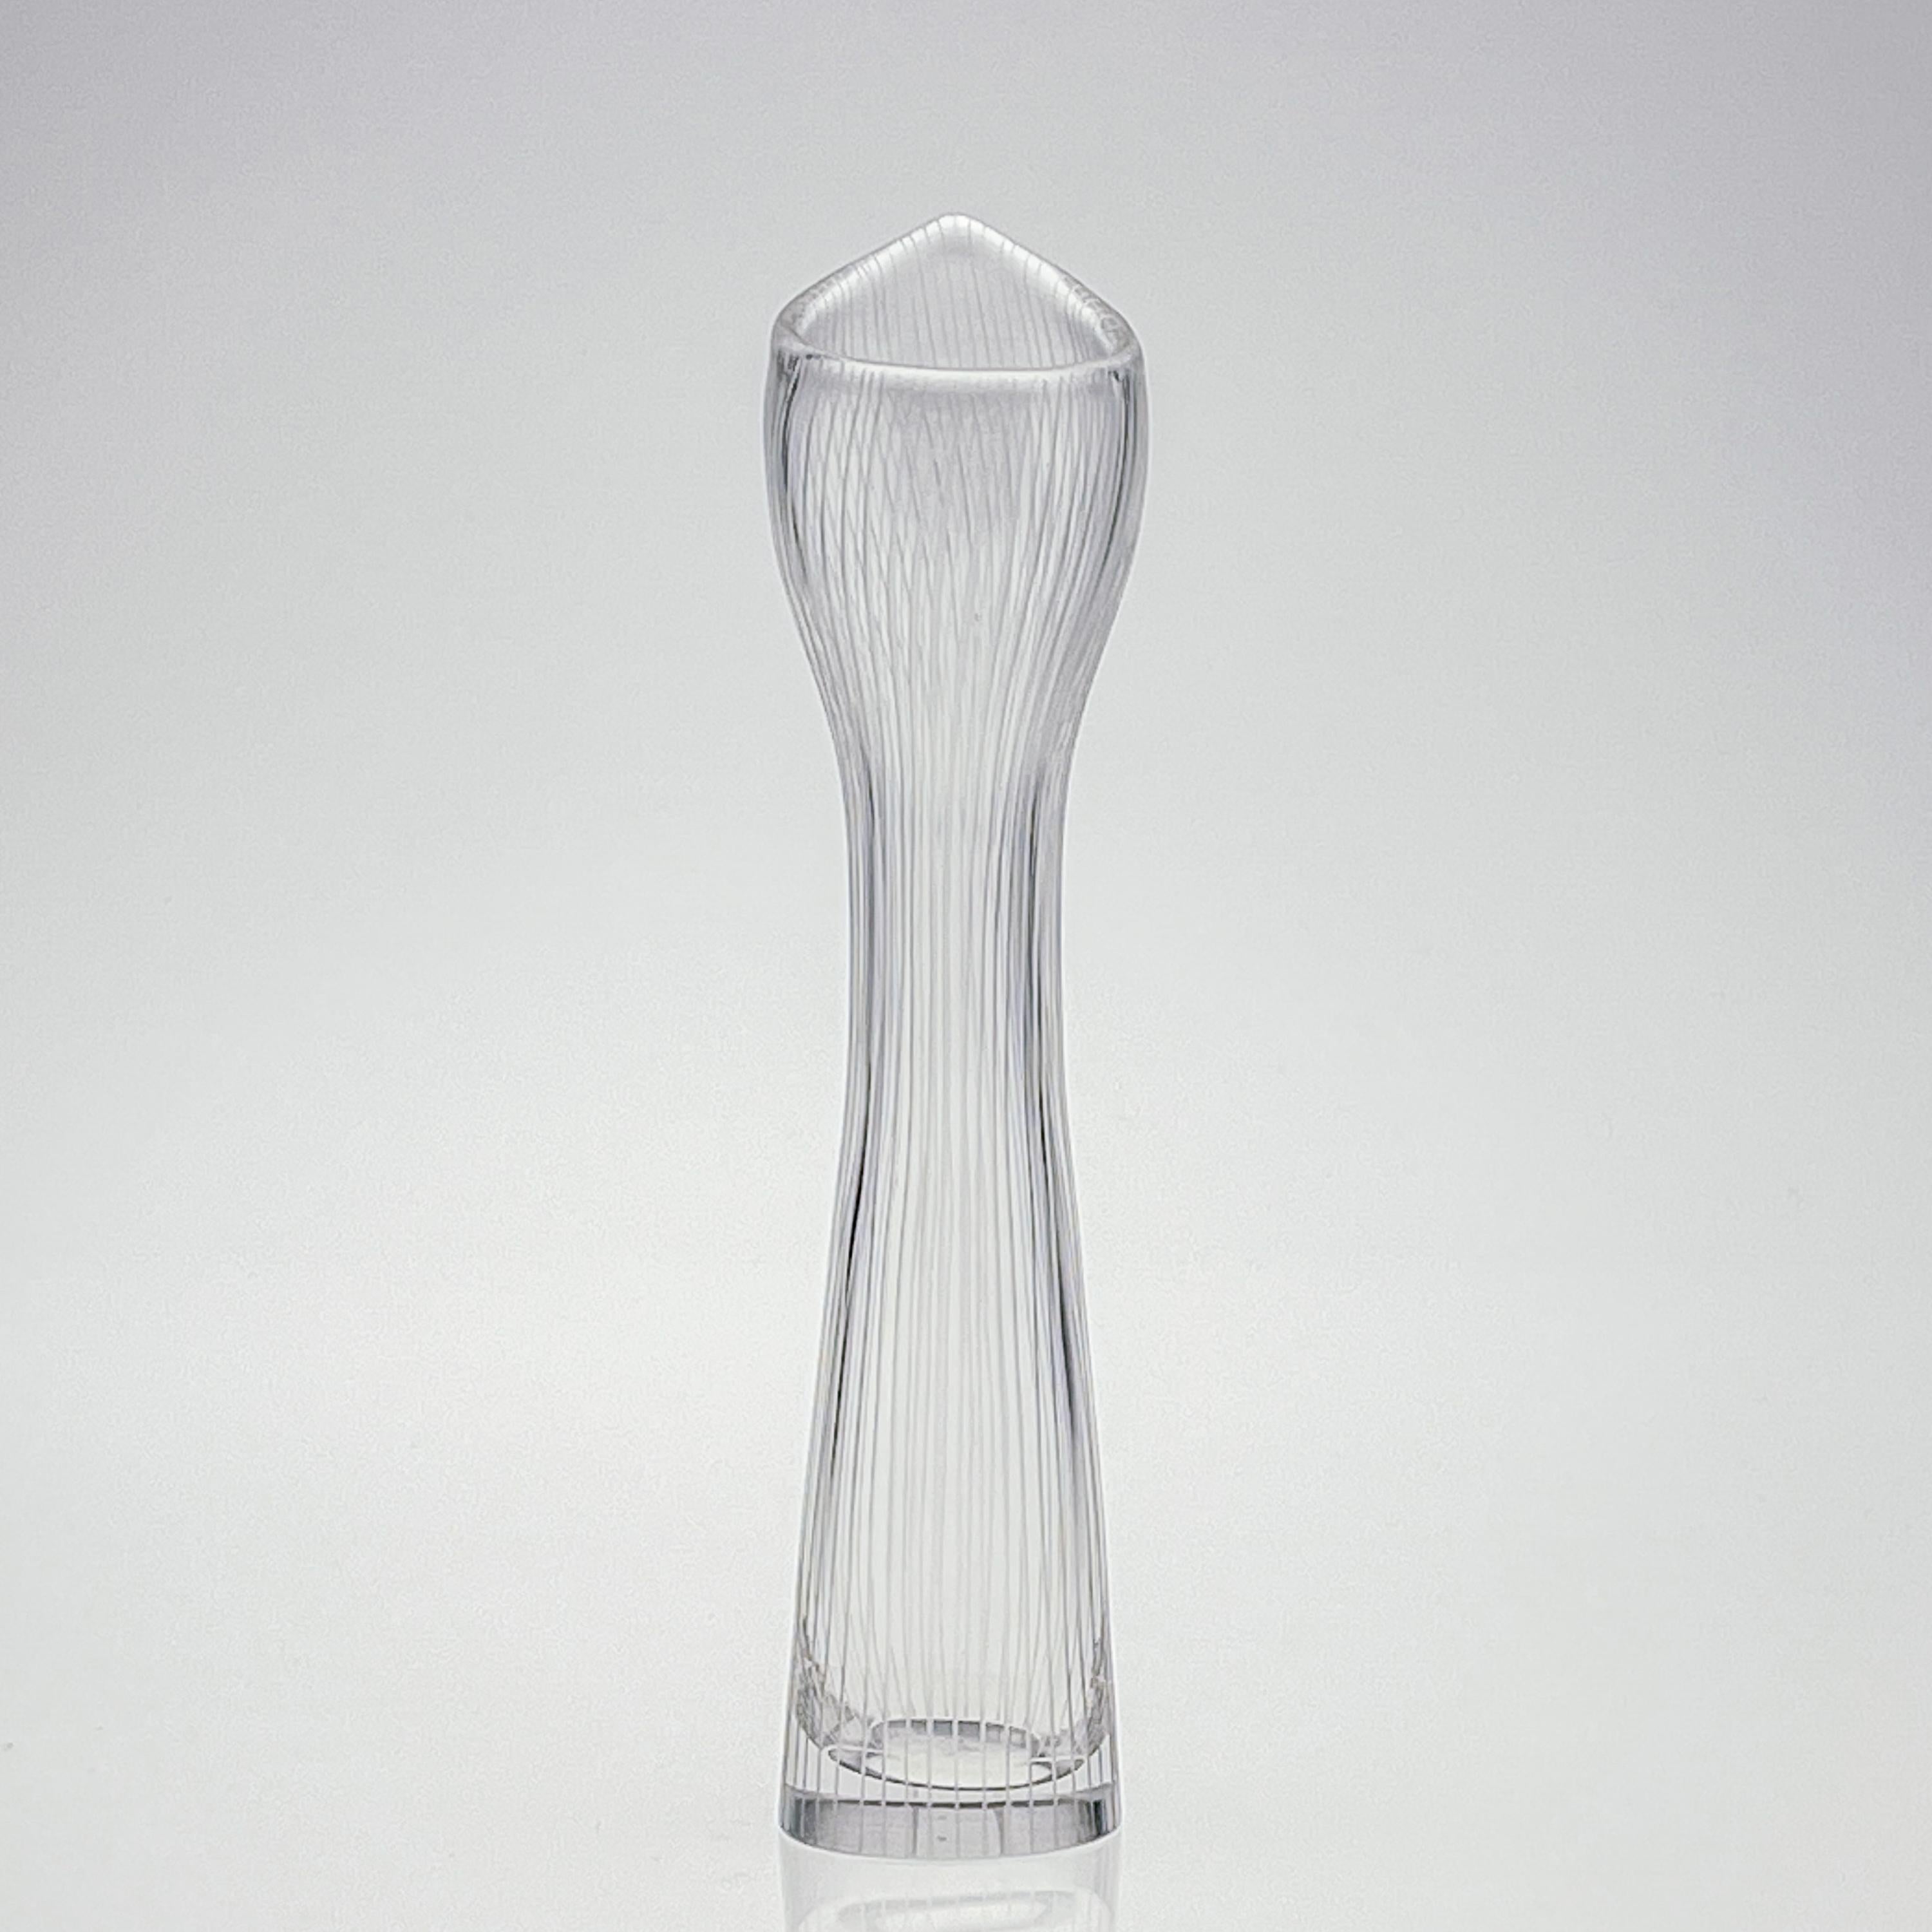 Scsndinavian Modern Tapio Wirkkala Crystal Line Cut Art Vase Handblown 1957 For Sale 1